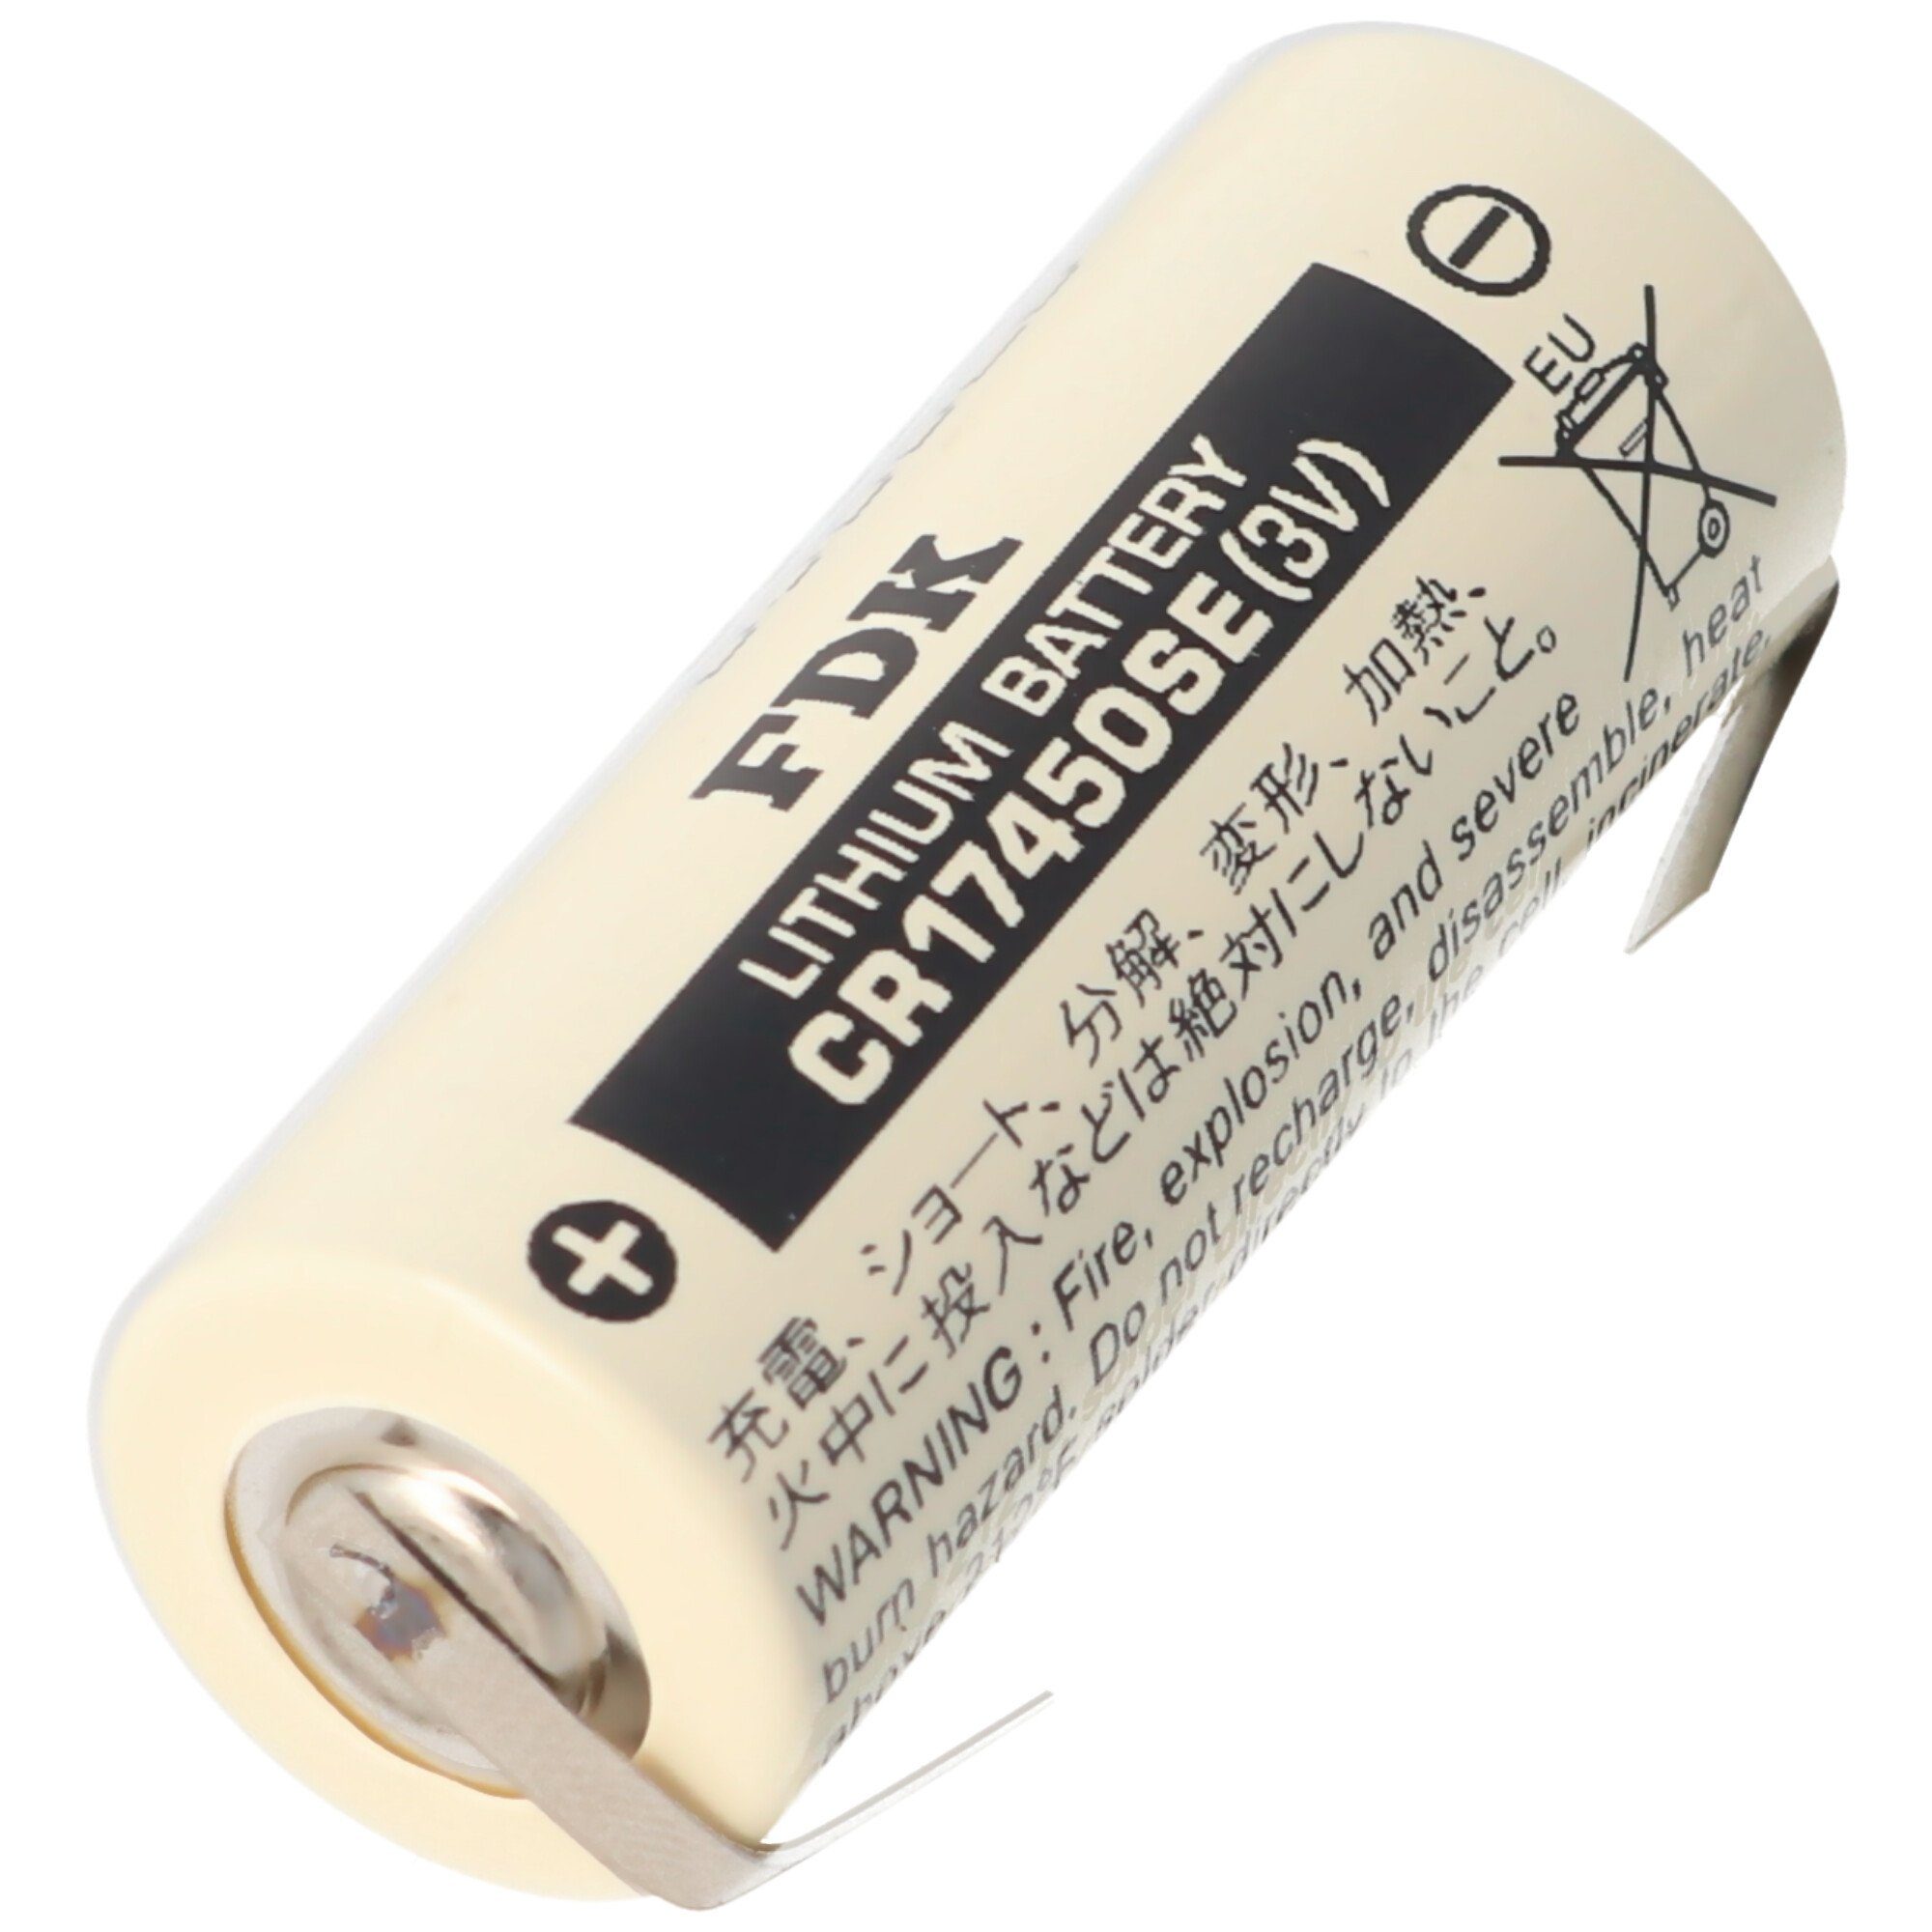 Sanyo FDK Sanyo Lithium Batterie CR17450SE Size A, mit Lötfahne U-Form Batterie, (3,0 V)